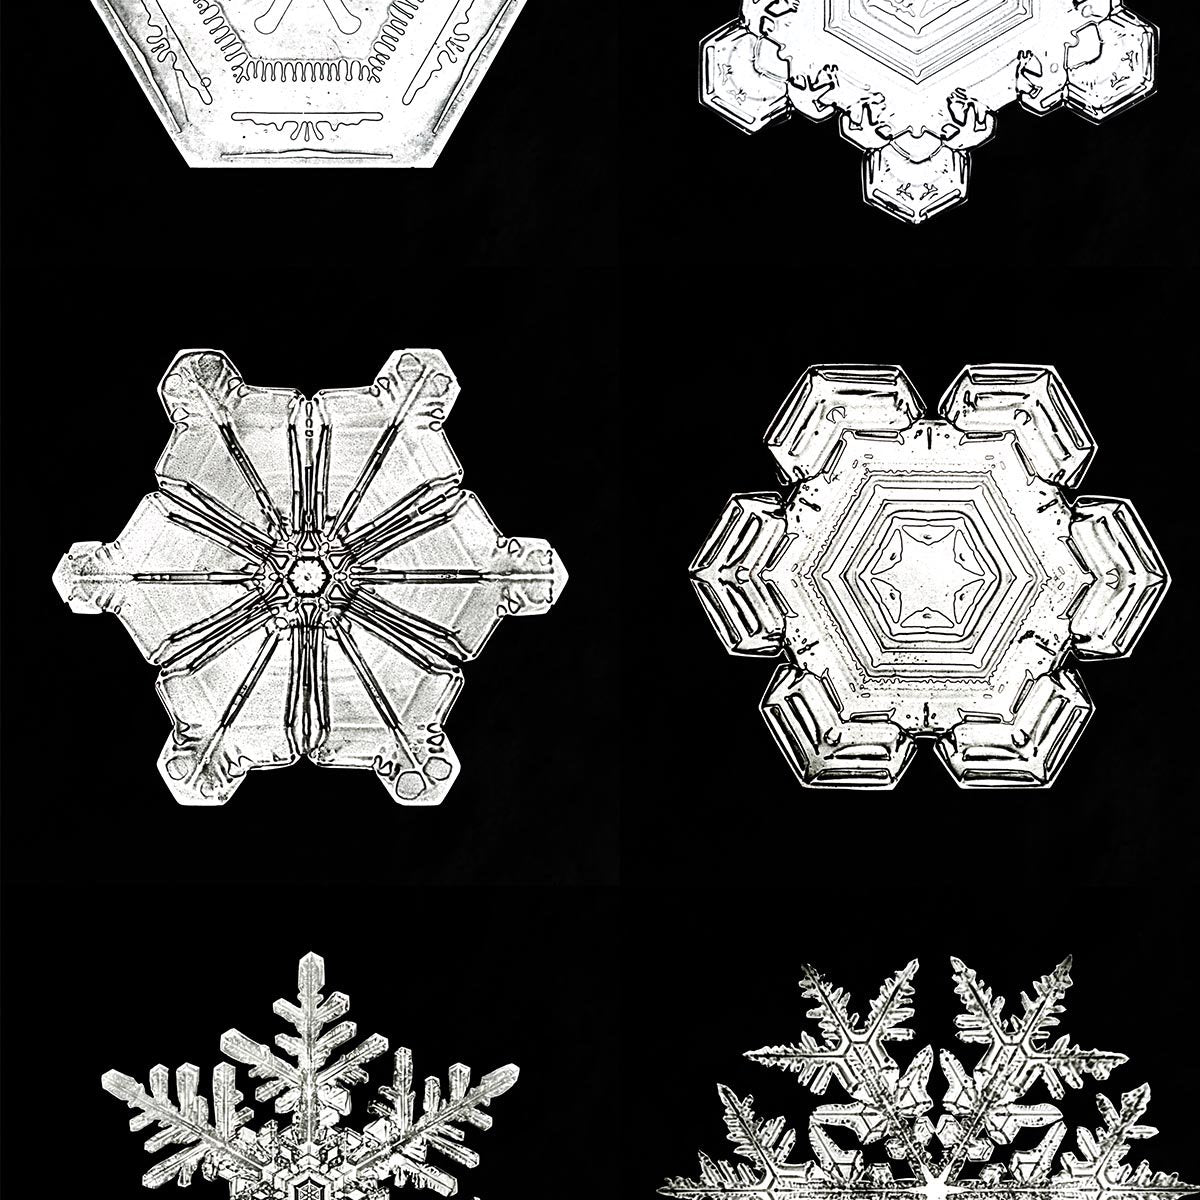 Snowflakes by Wilson Bentley